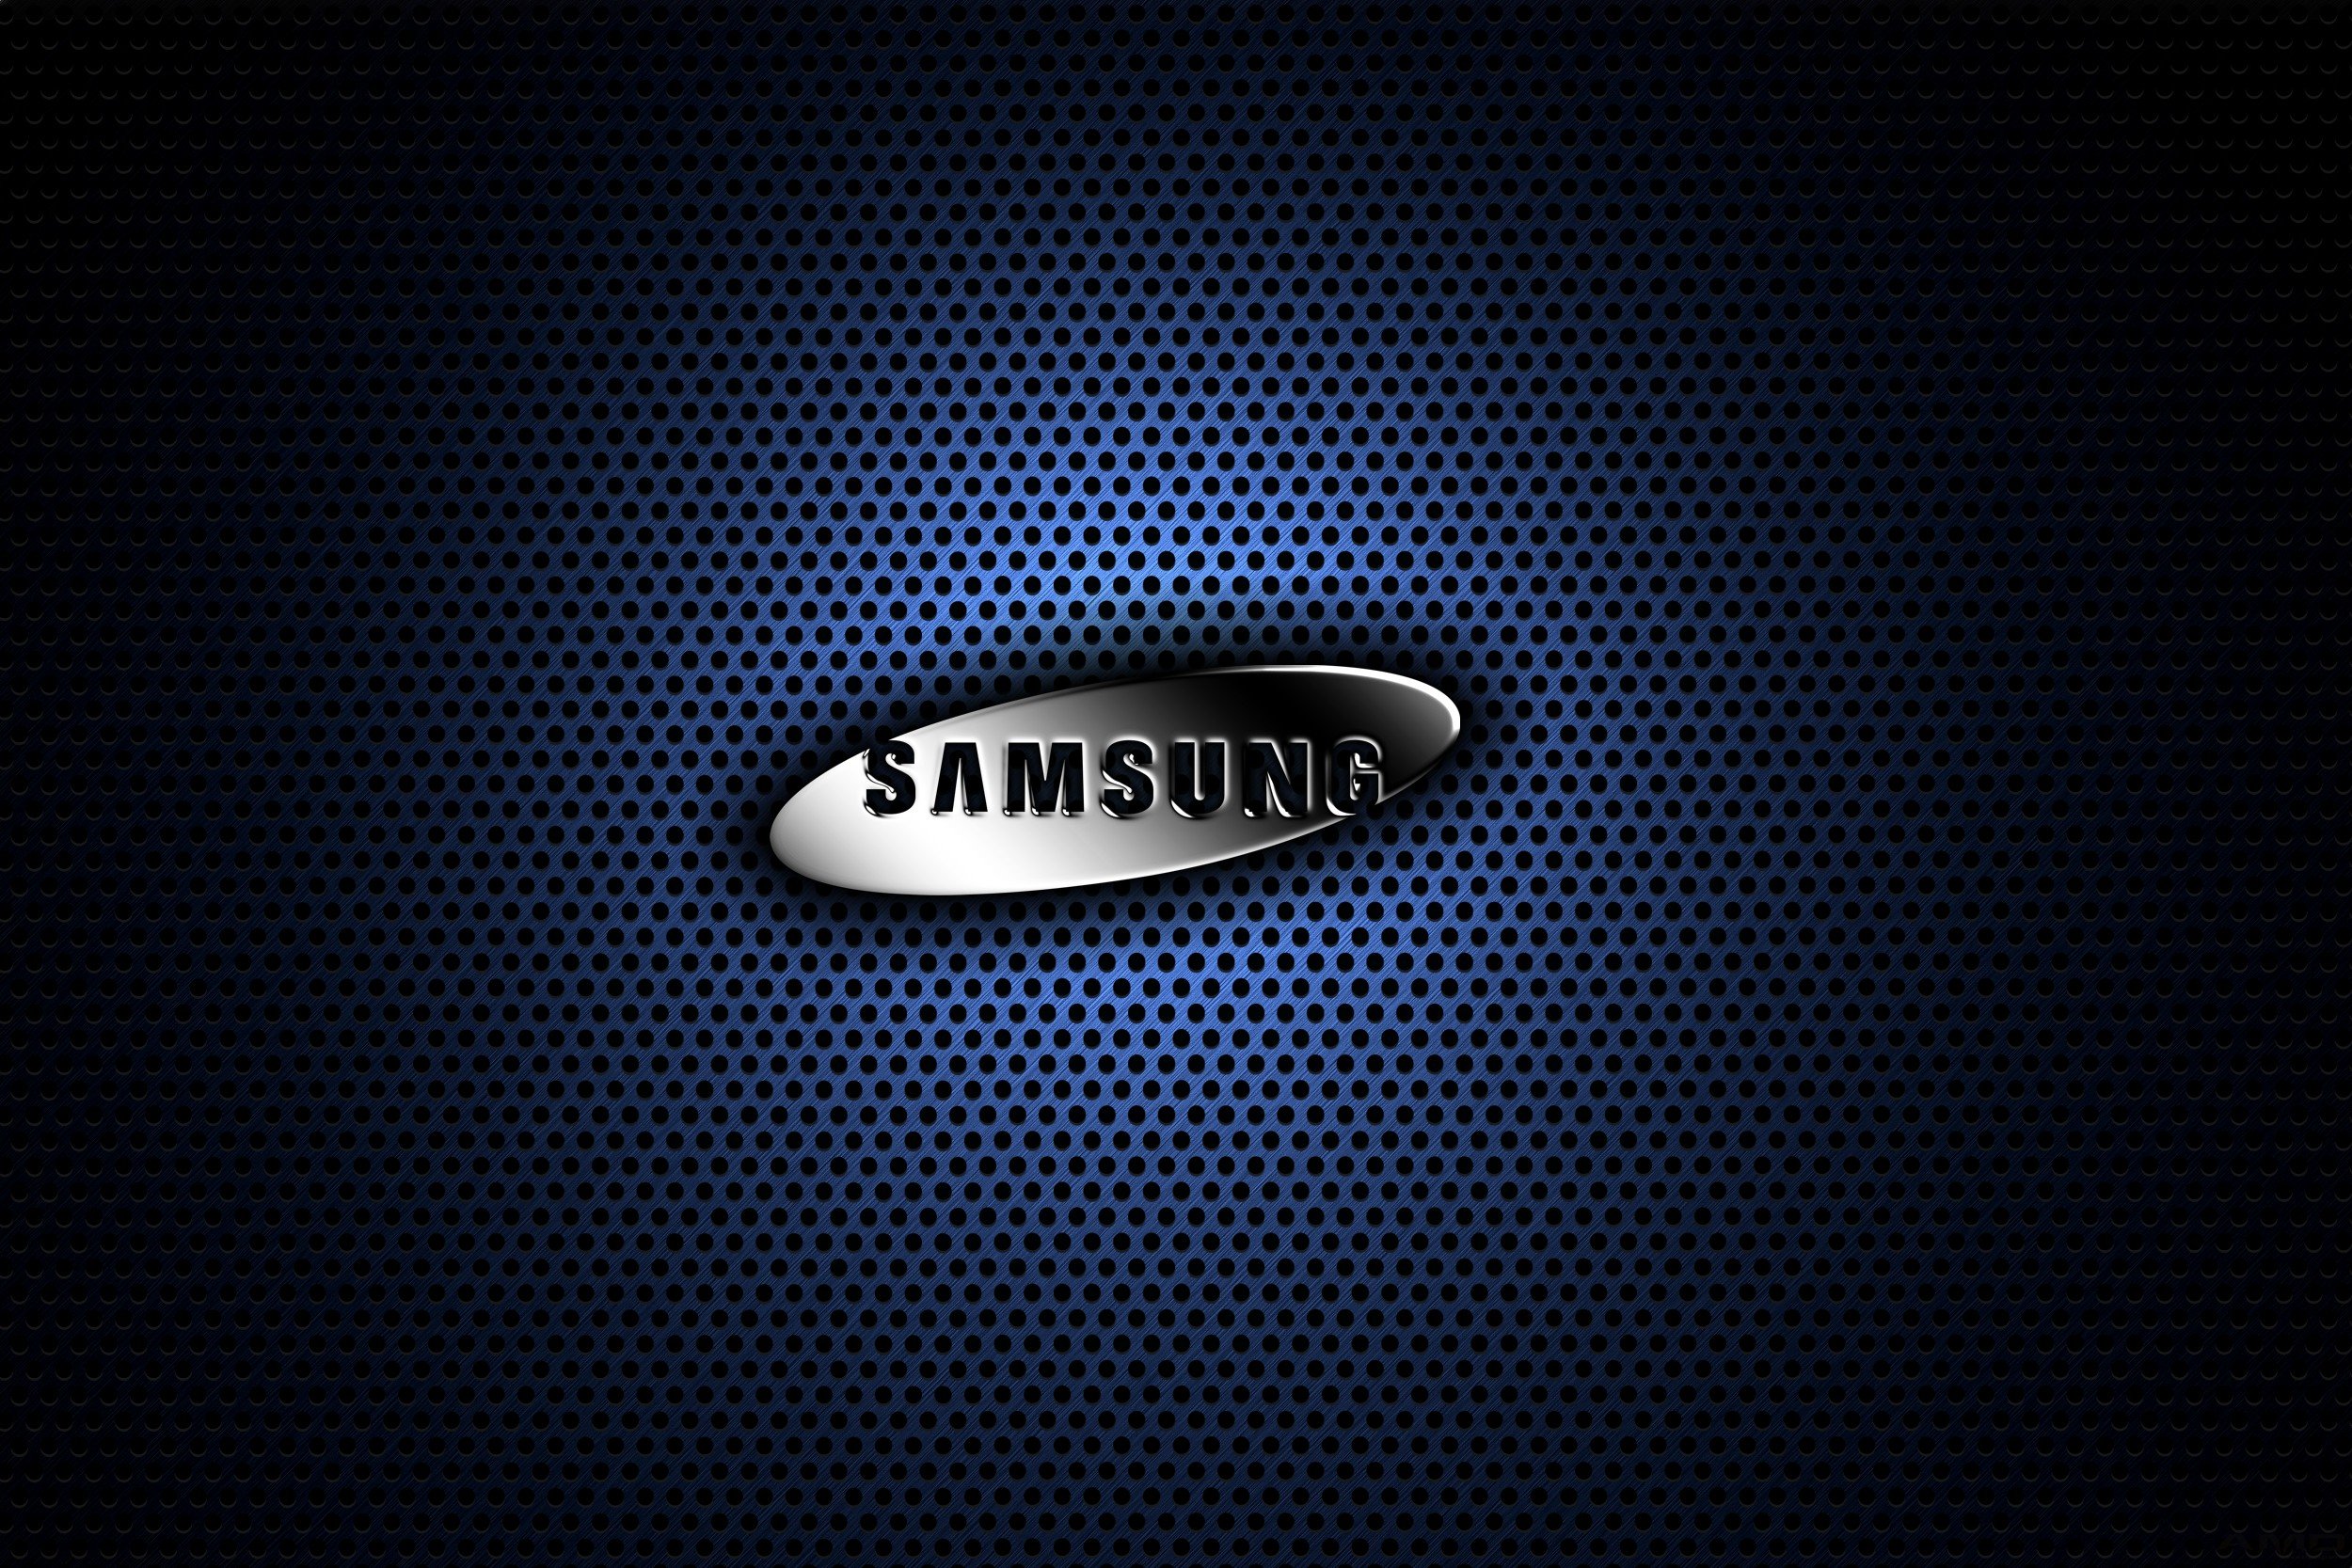 28+] Full HD Background Wallpaper 1080p For Samsung Galaxy S4 -  WallpaperSafari